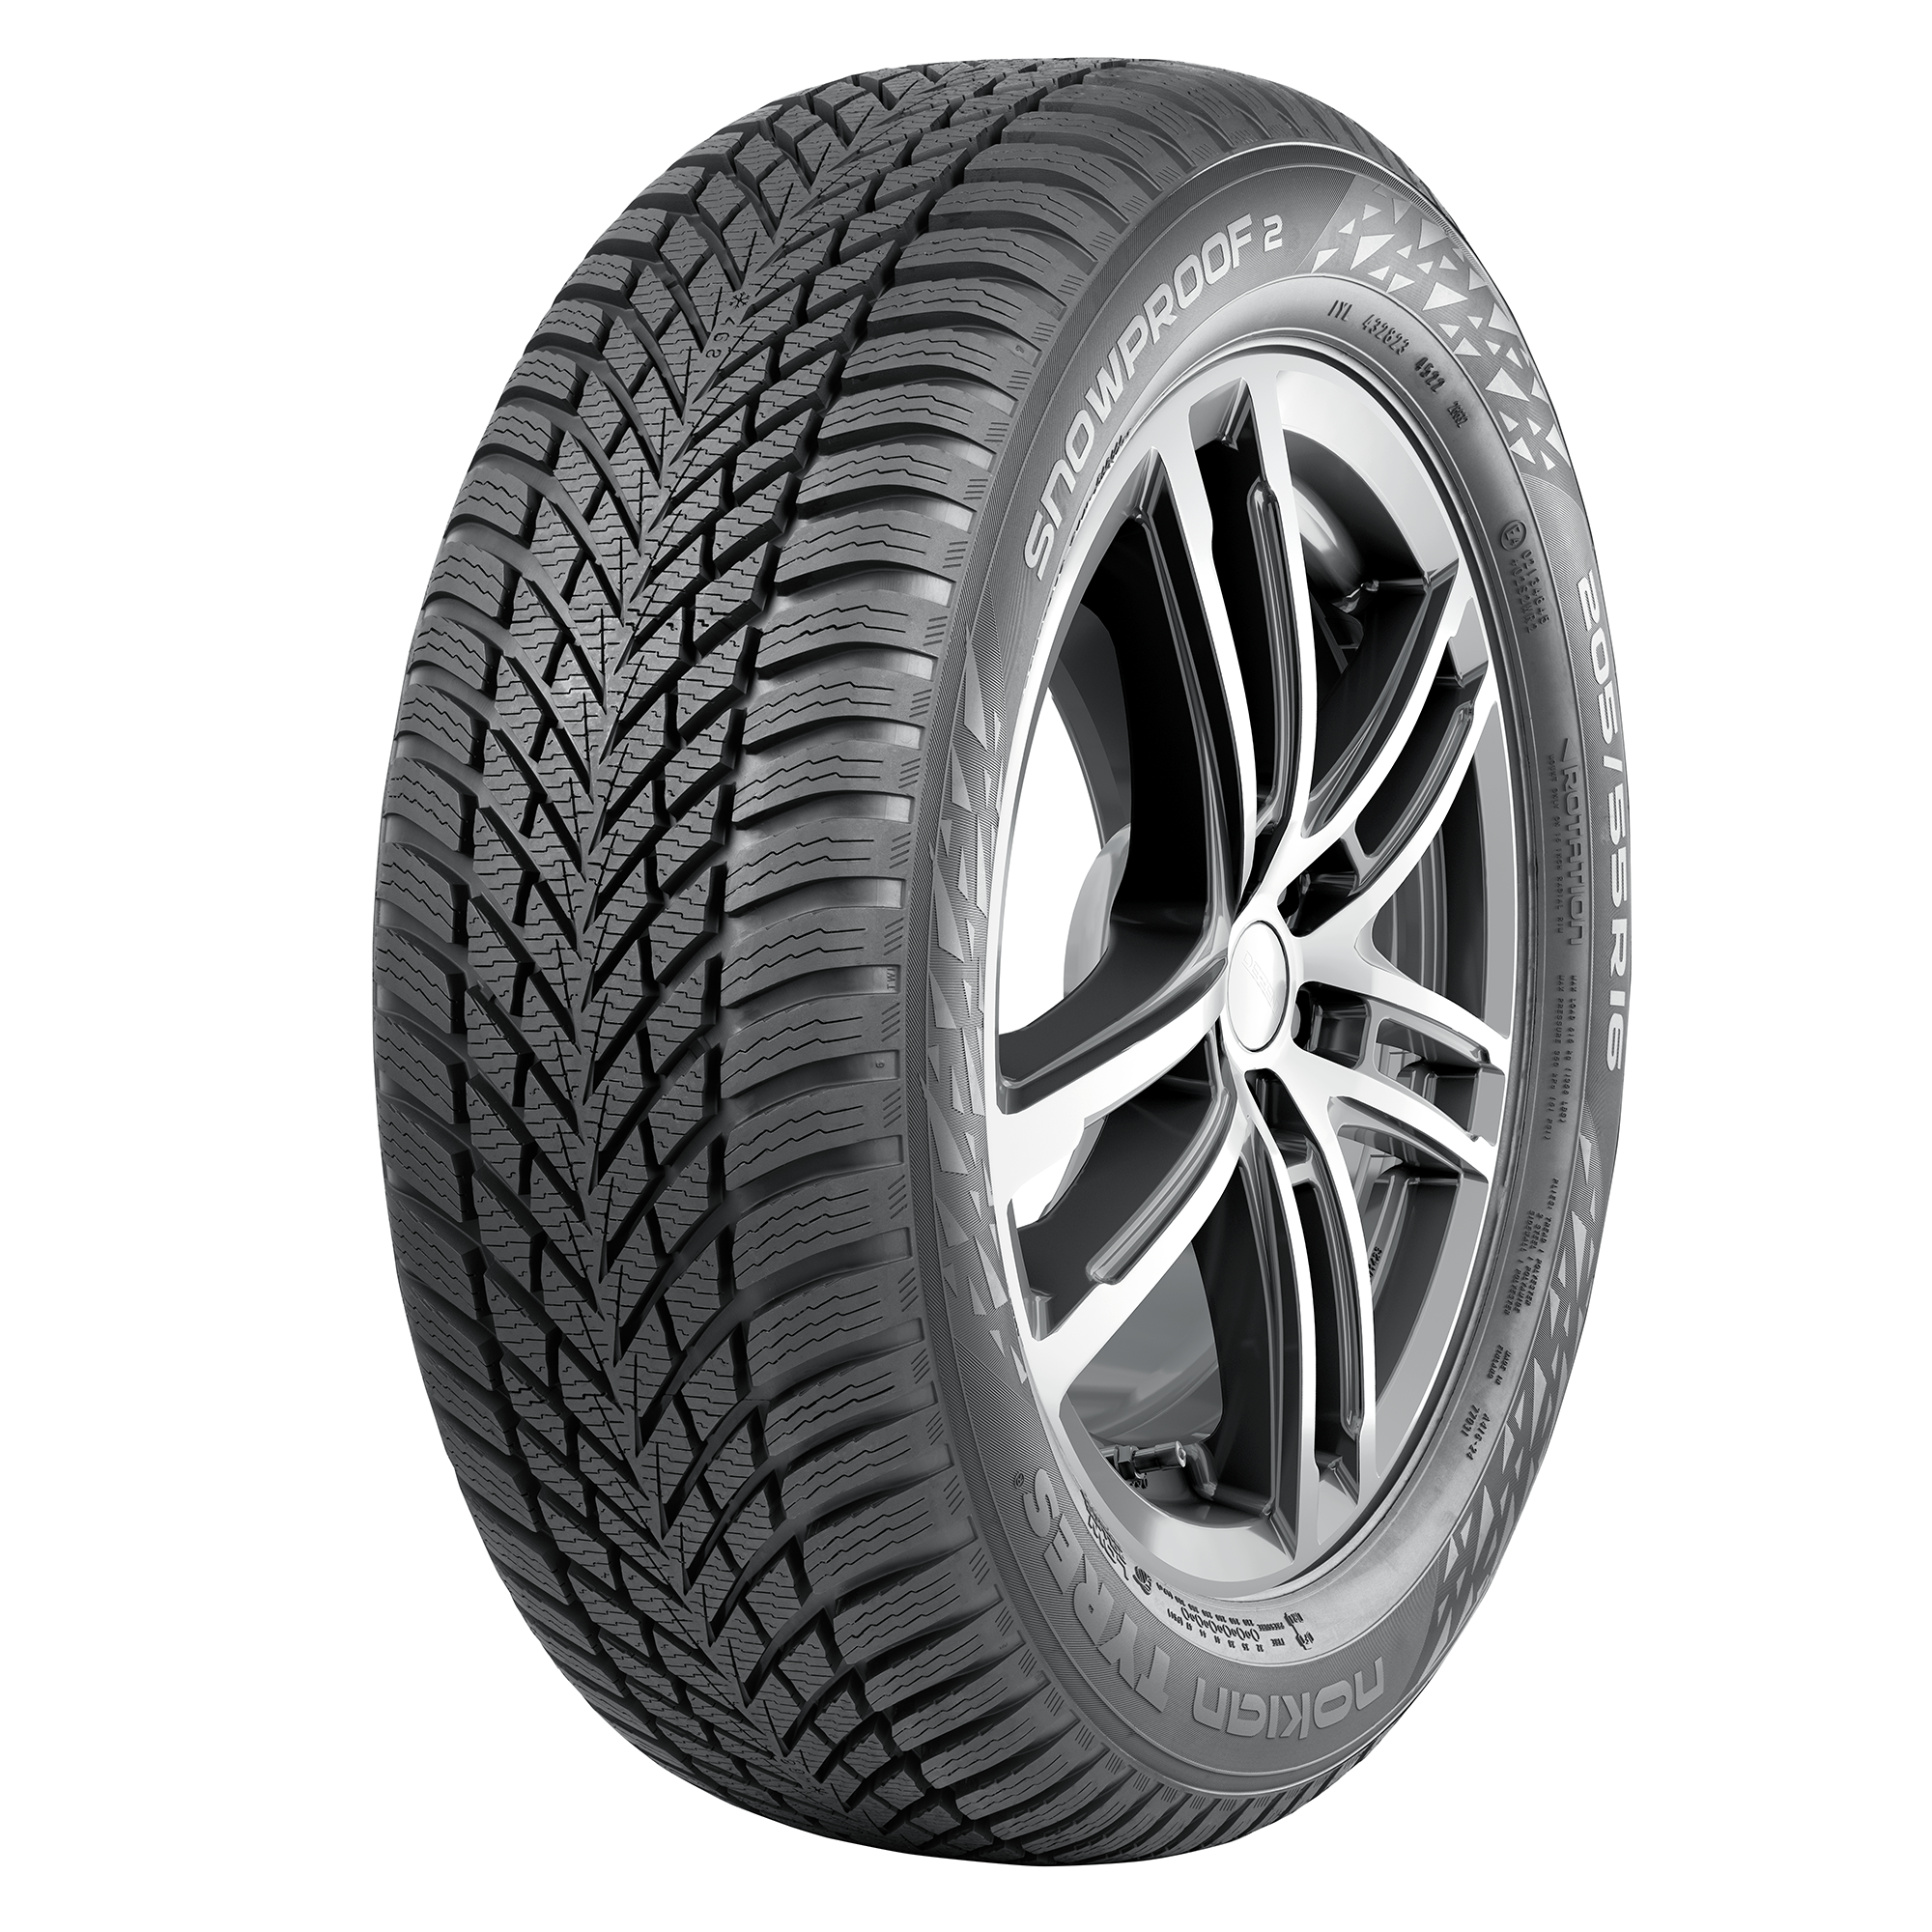 Nokian Tyres Snowproof 2 225/55 R17 97H